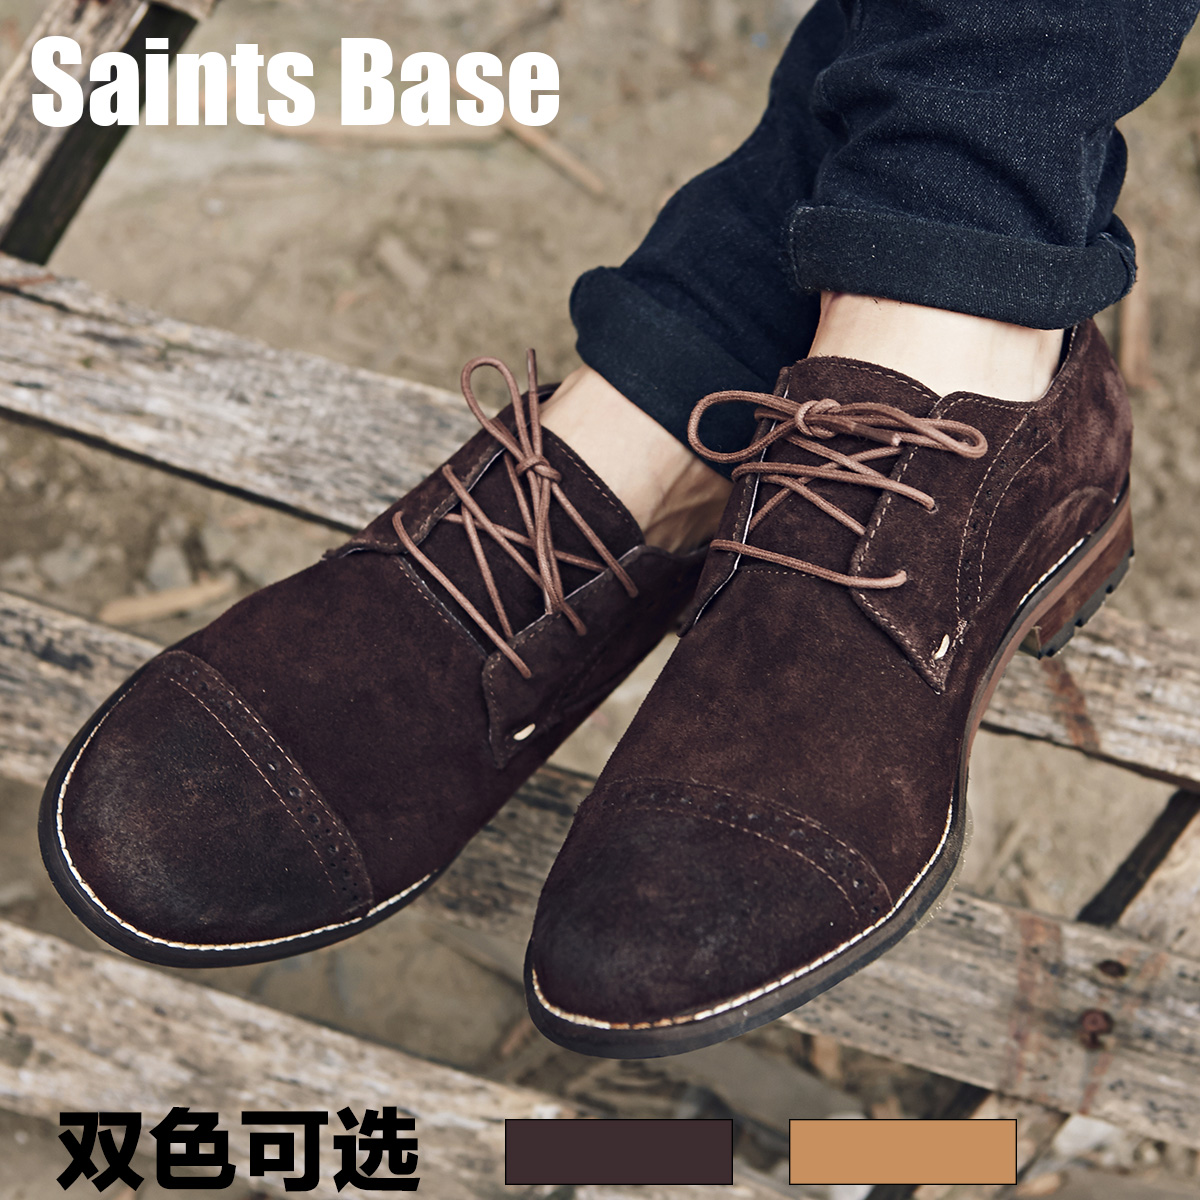 saints base shoes